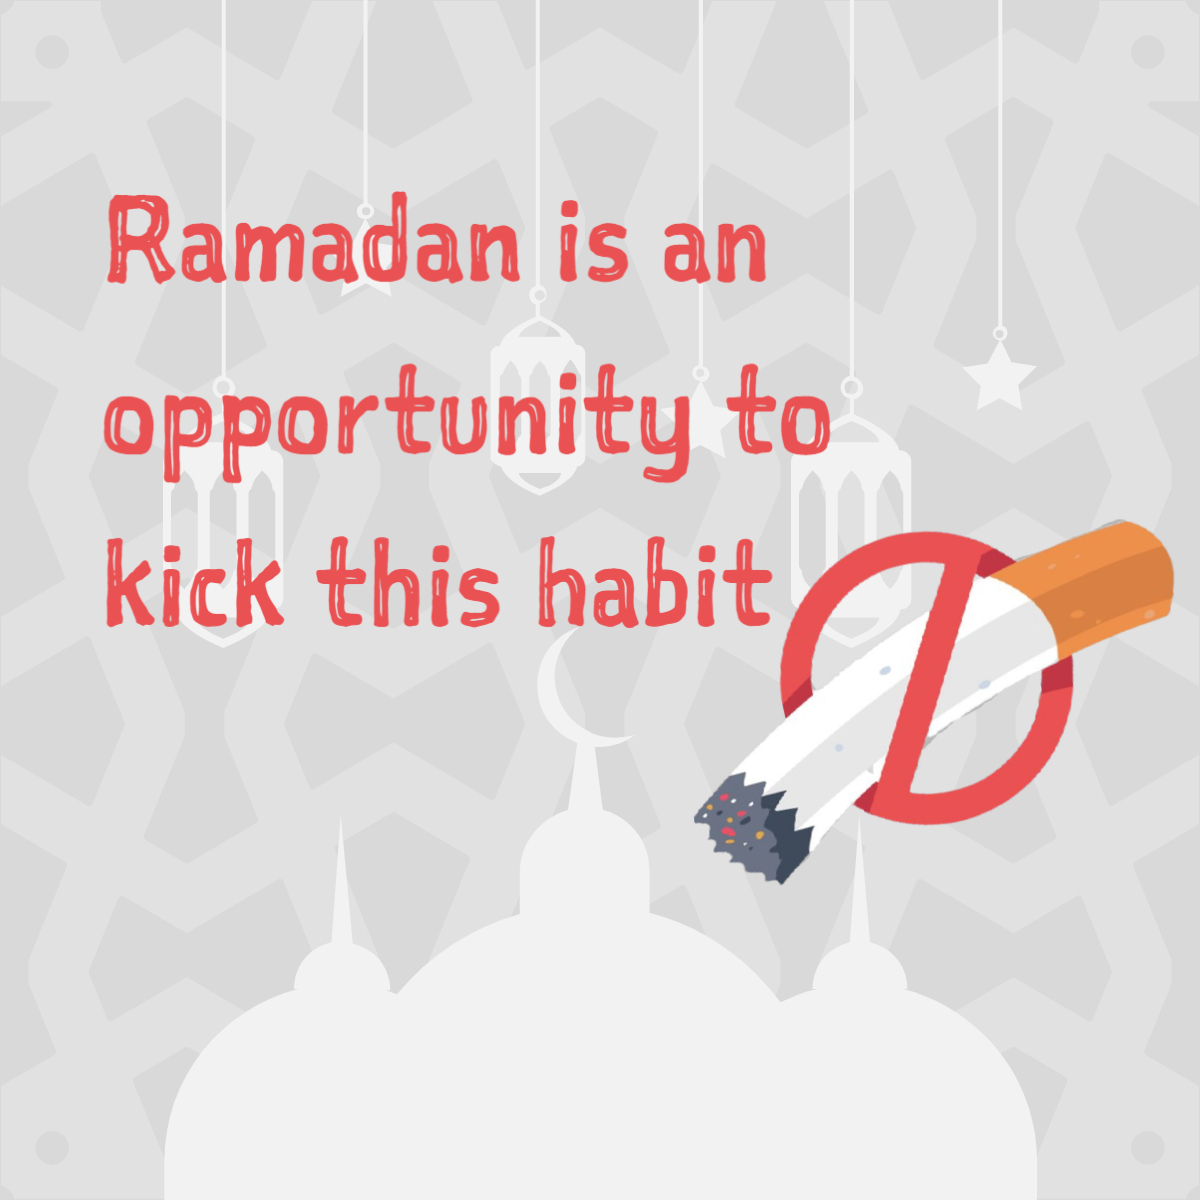 kick_this_habit_in_ramadan